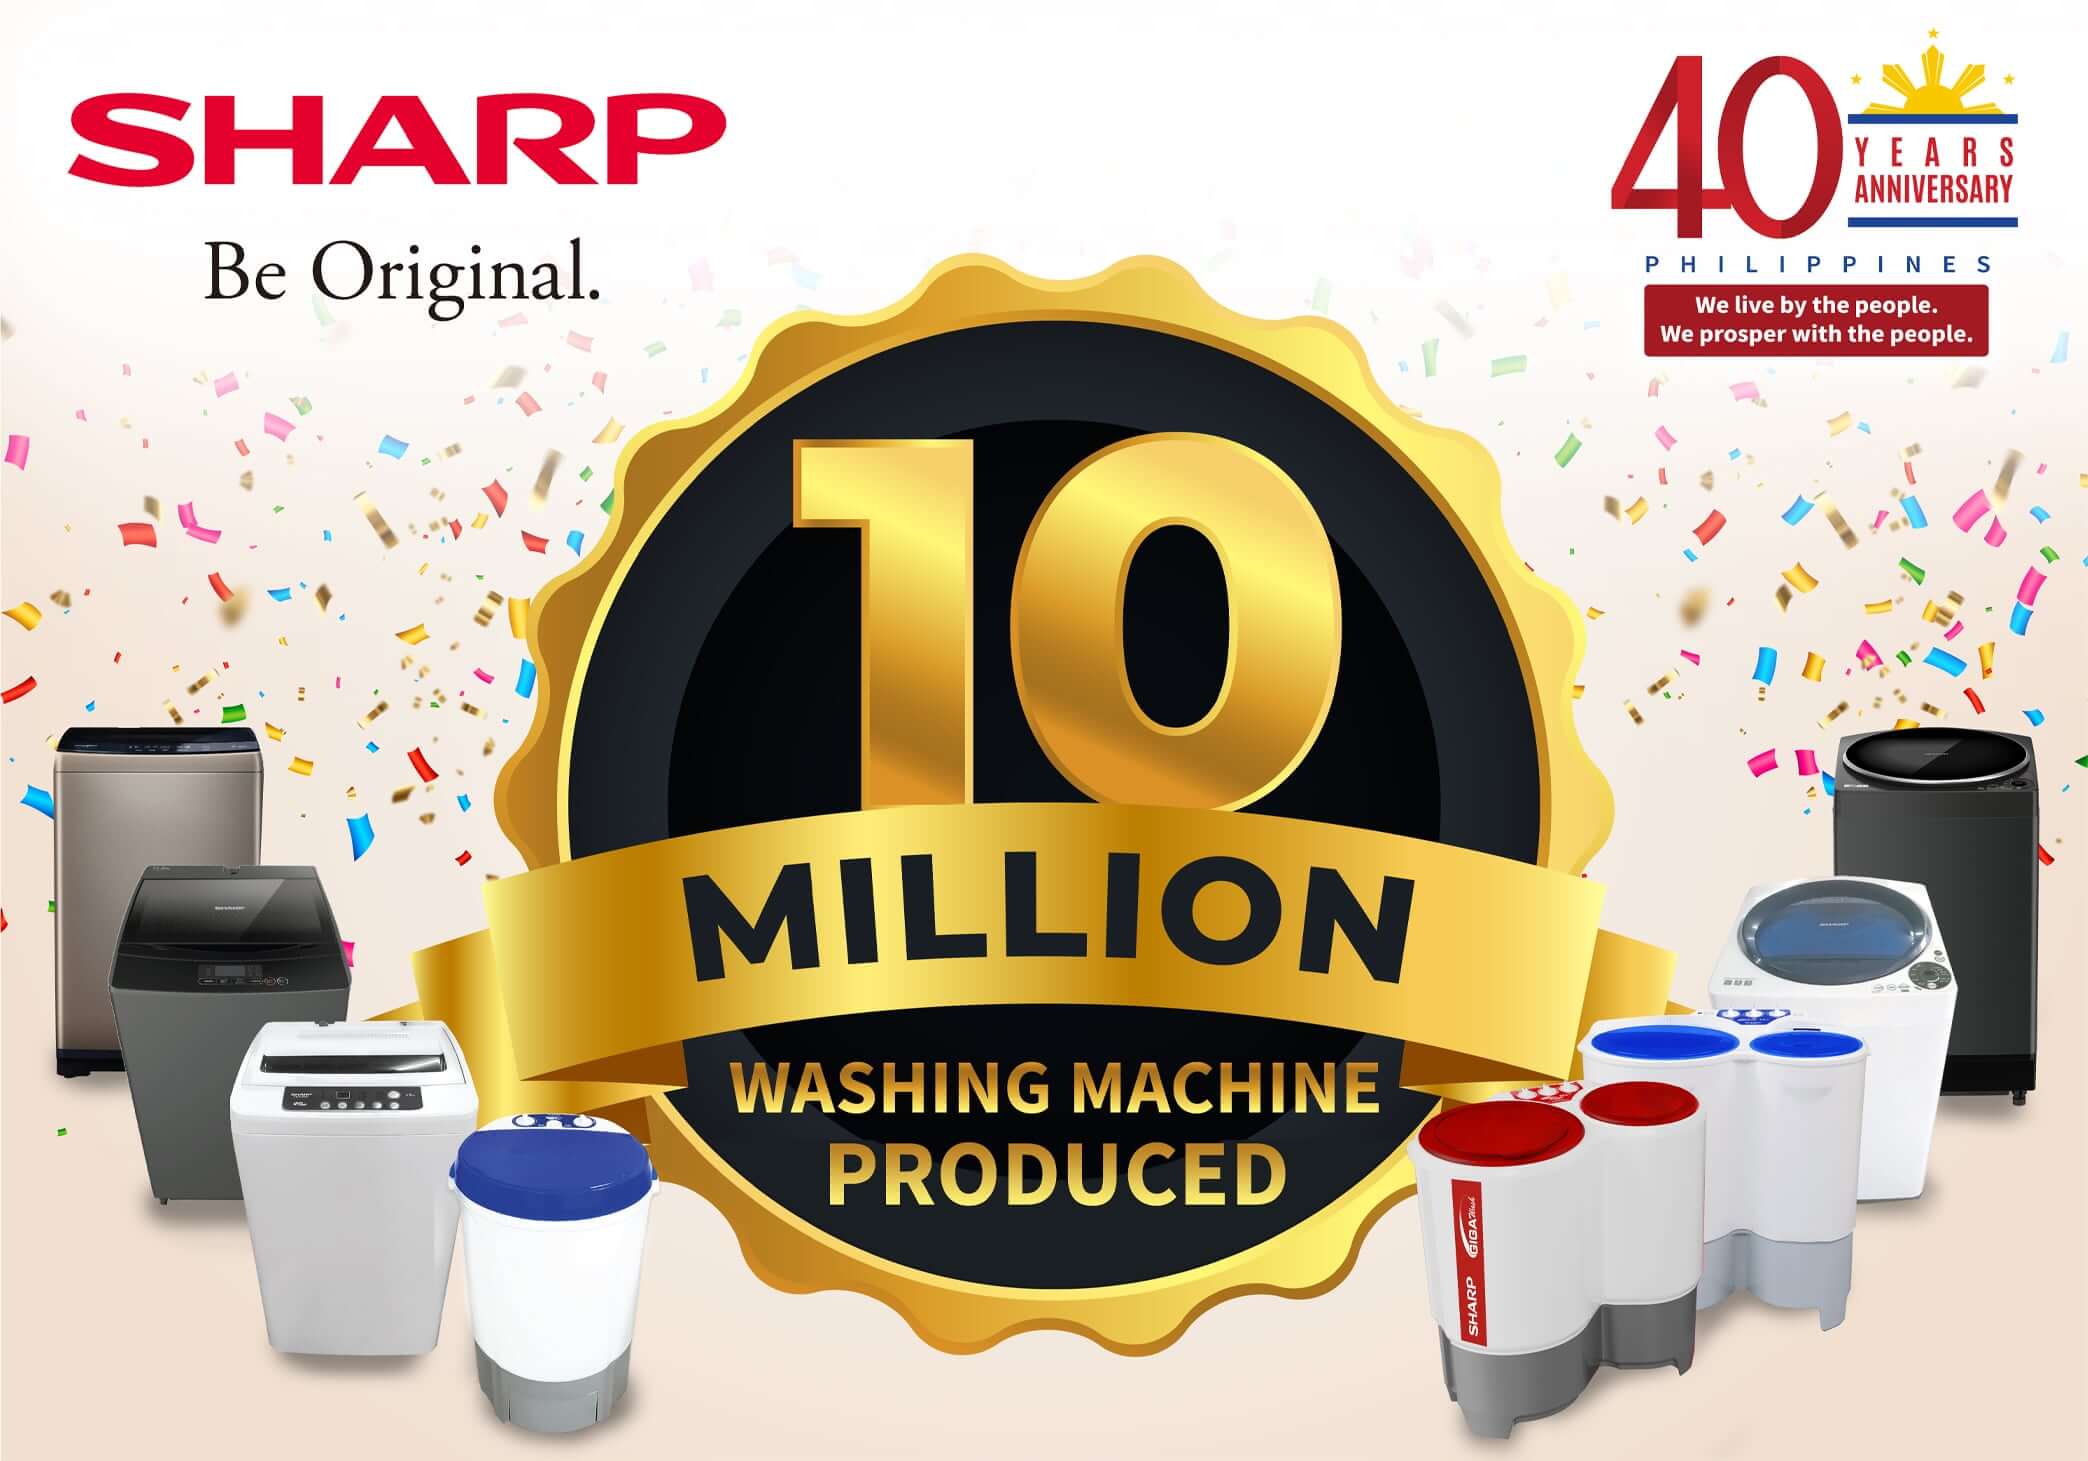 Sharp celebrates its 40th Anniversary